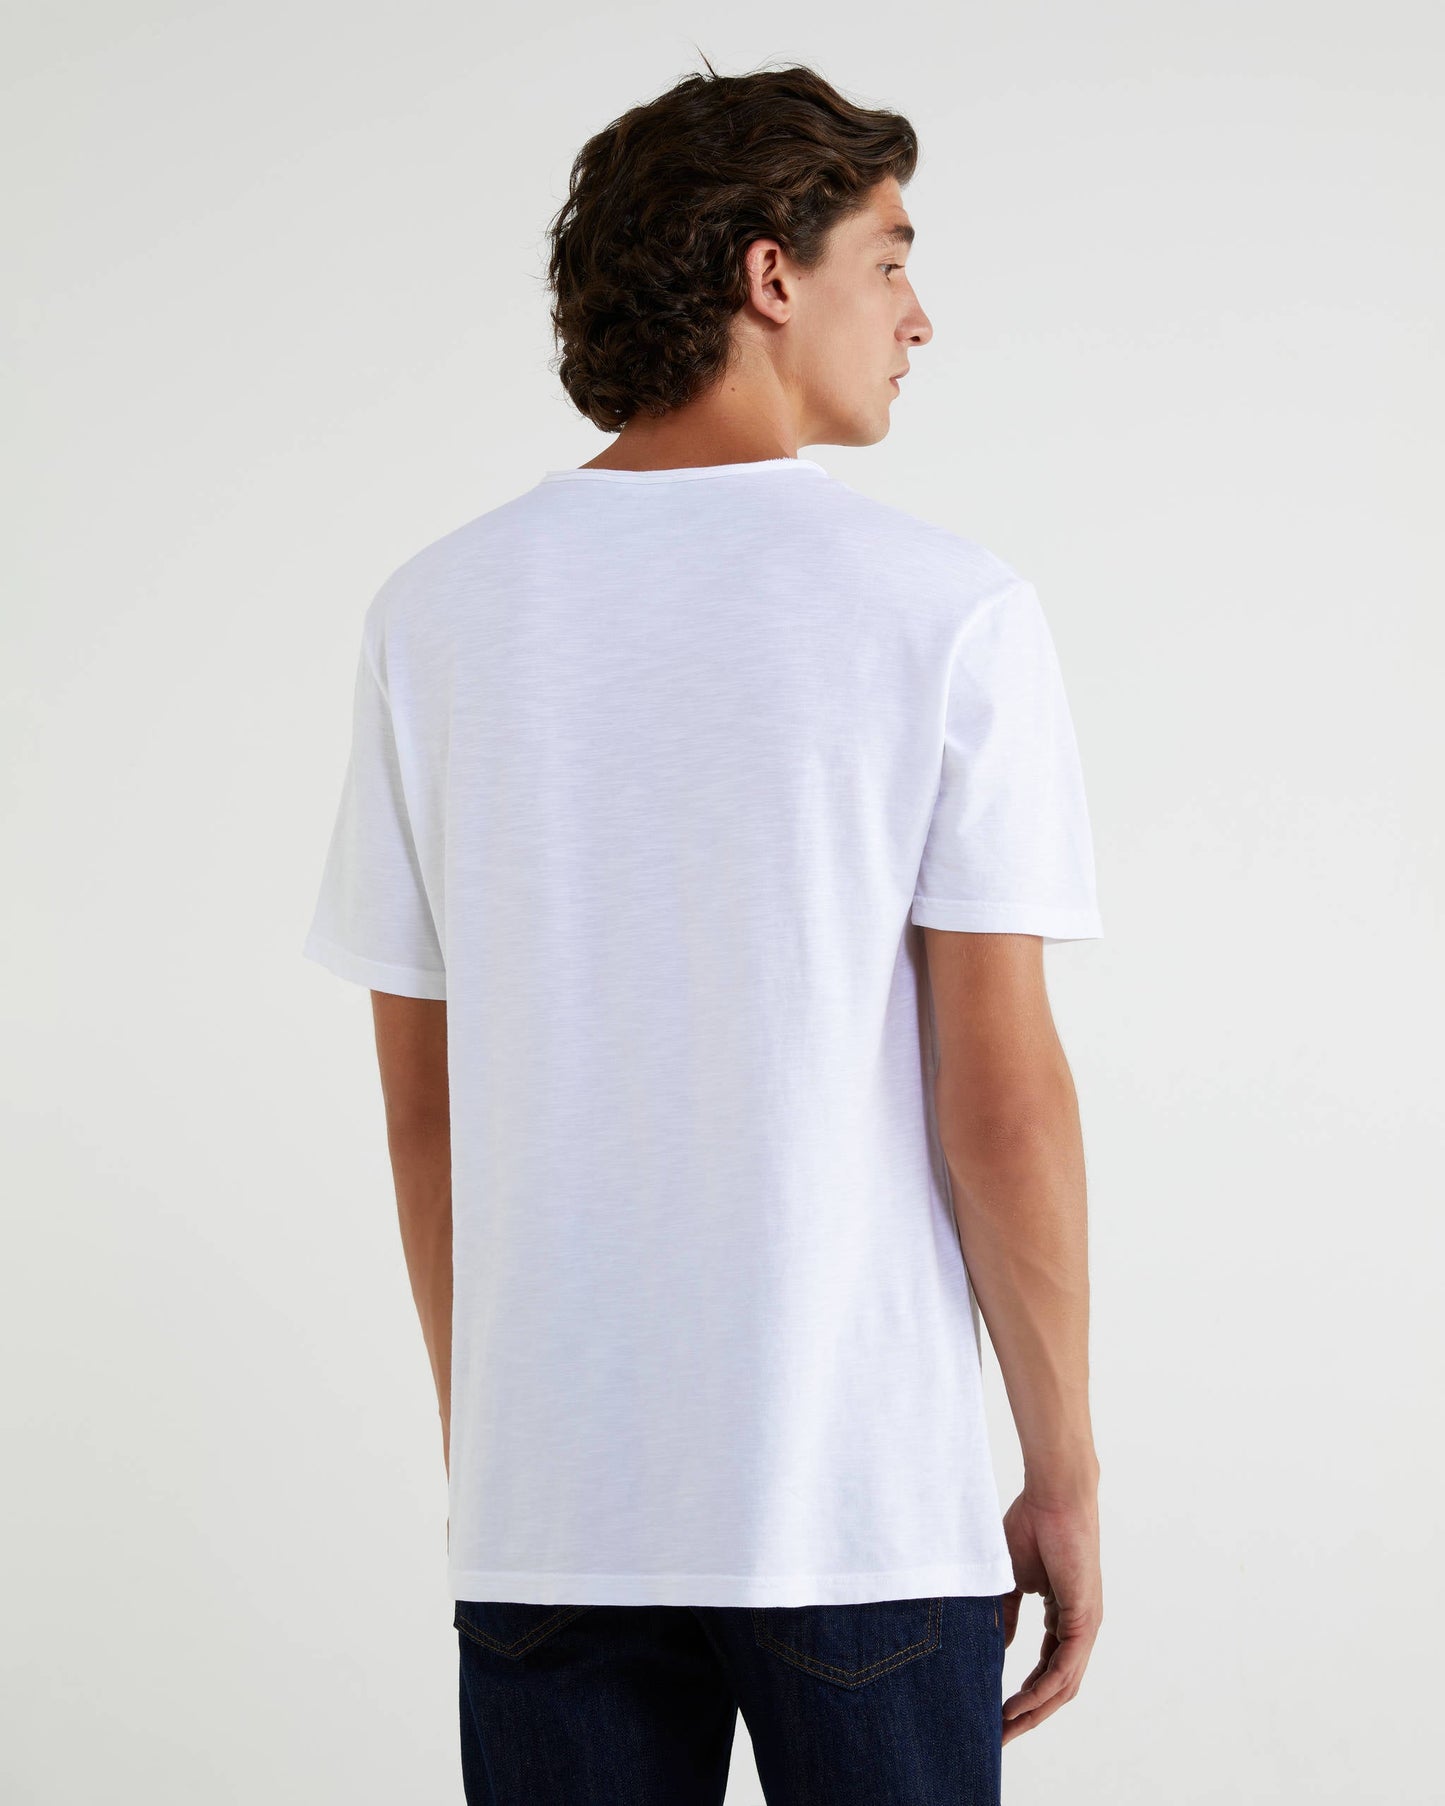 Camiseta manga corta color blanco de algodón flameado